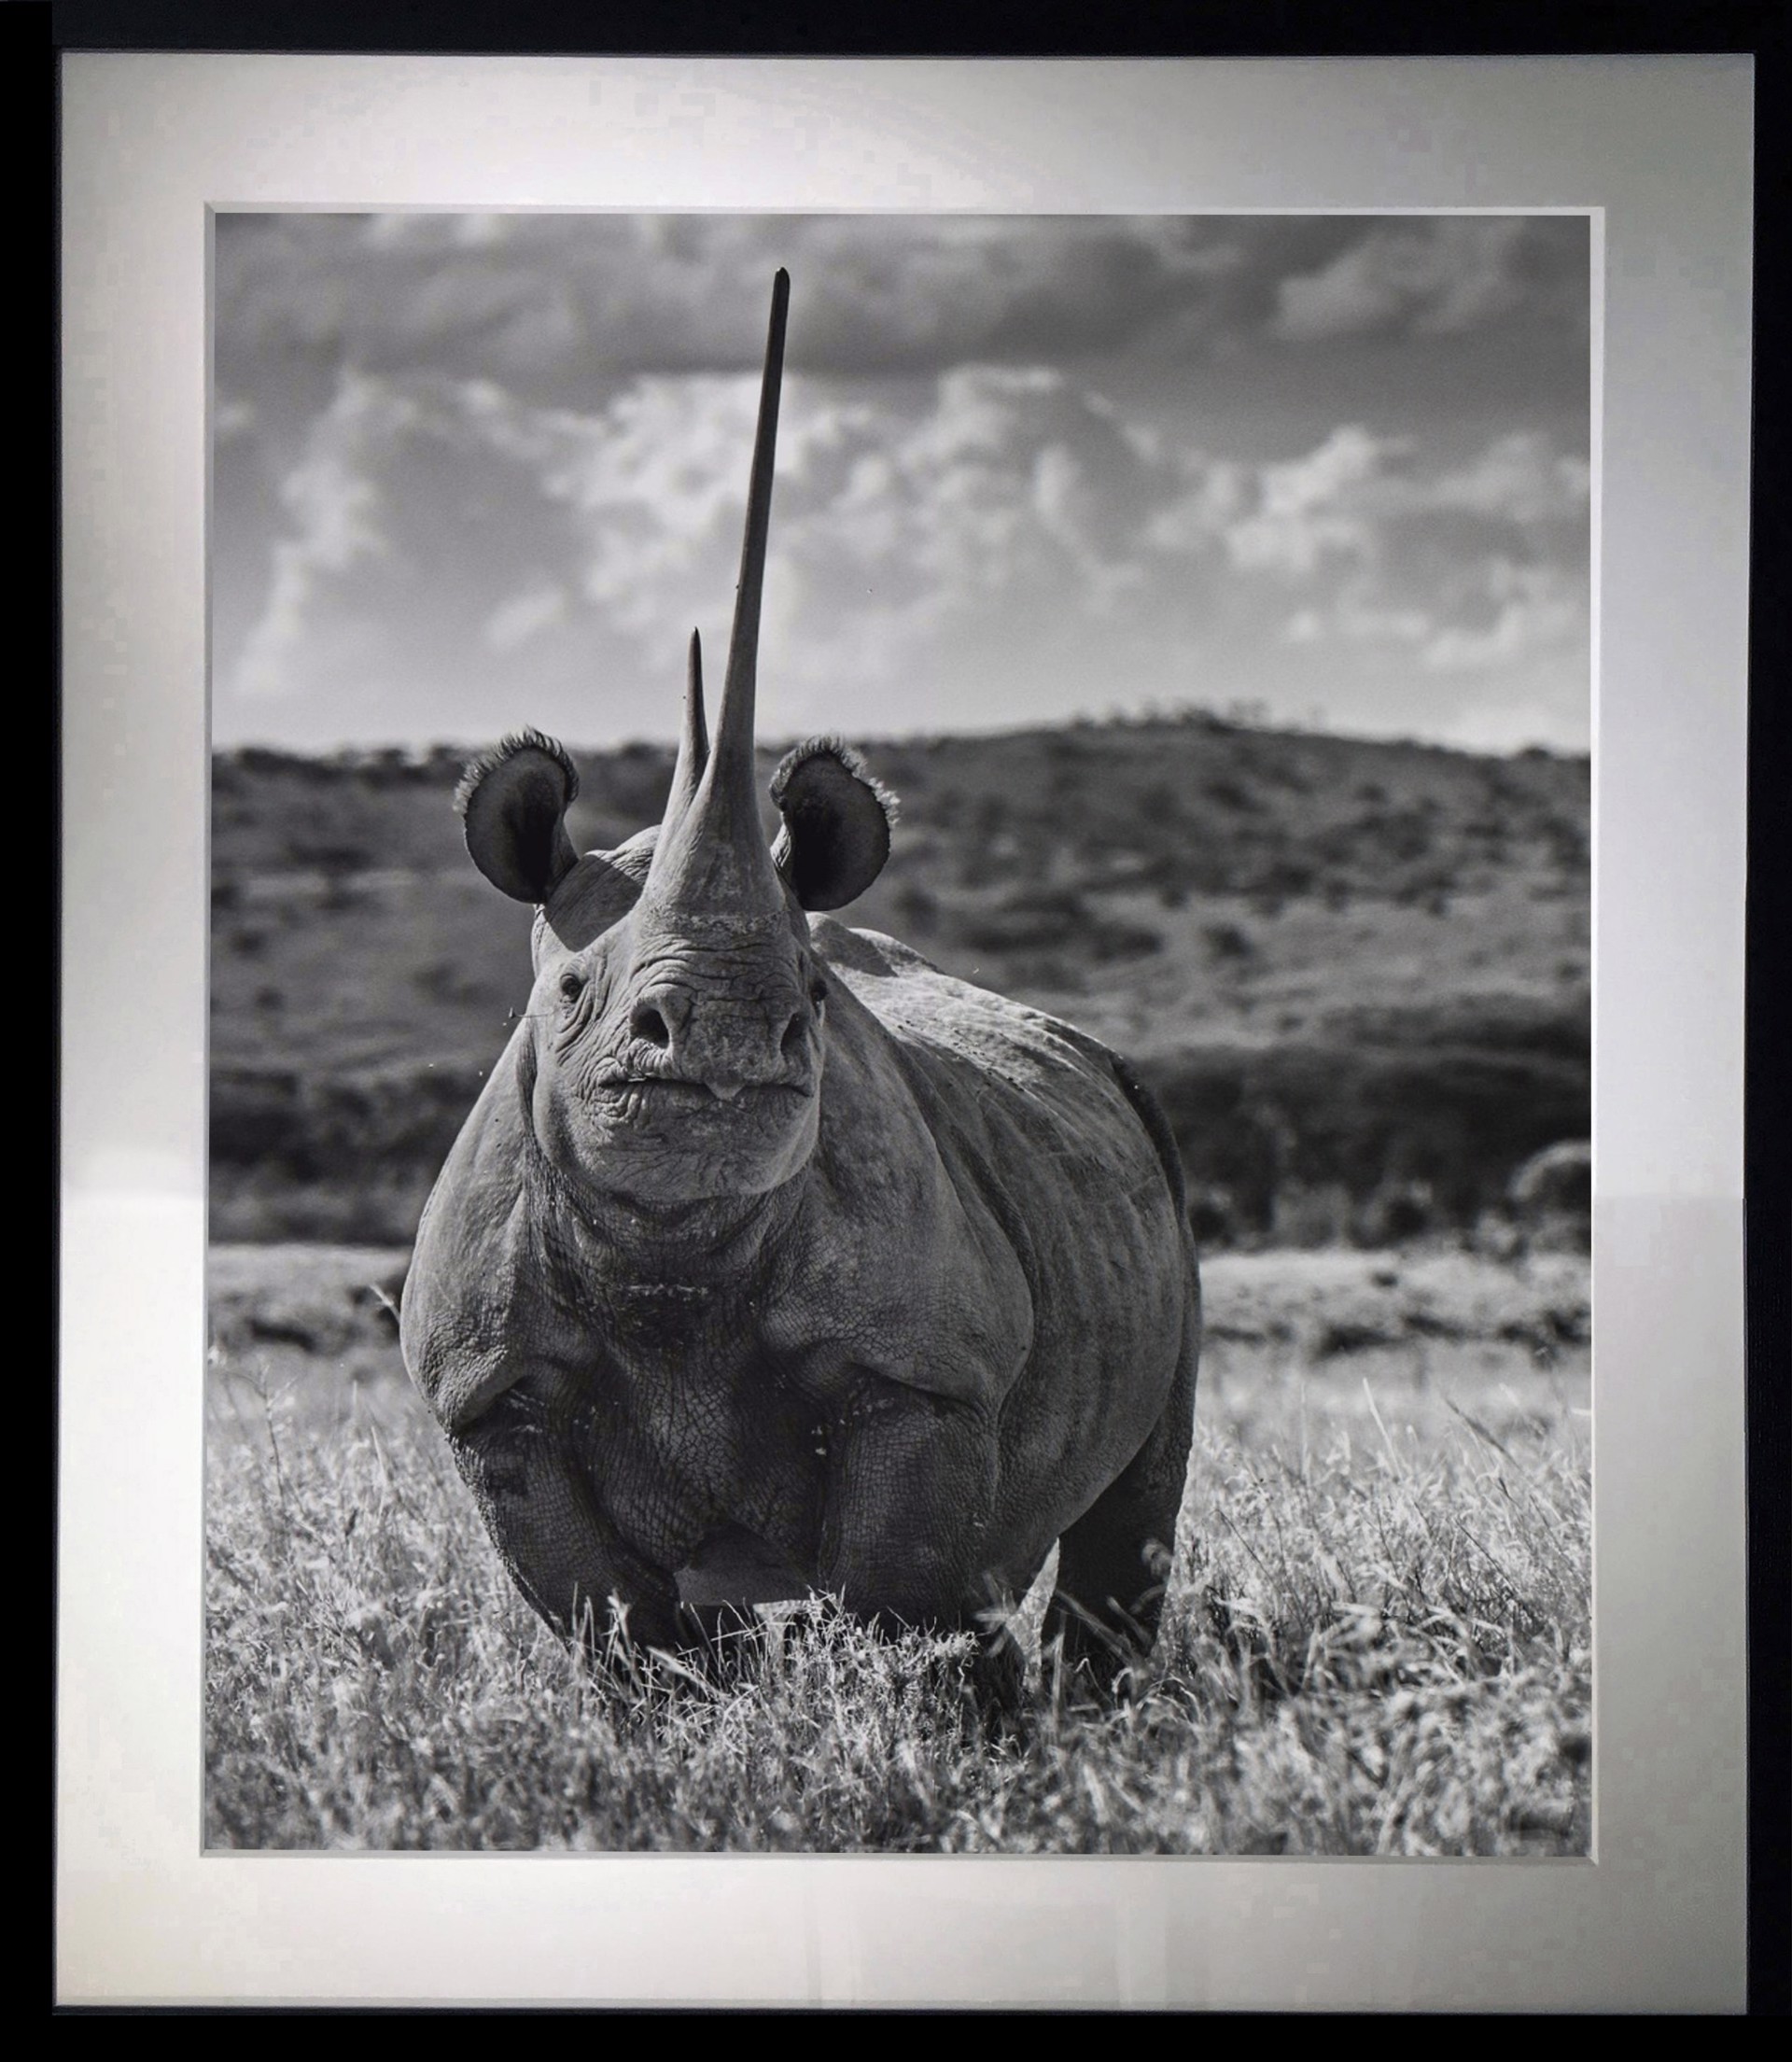 Unforgiven - Rhino by David Yarrow